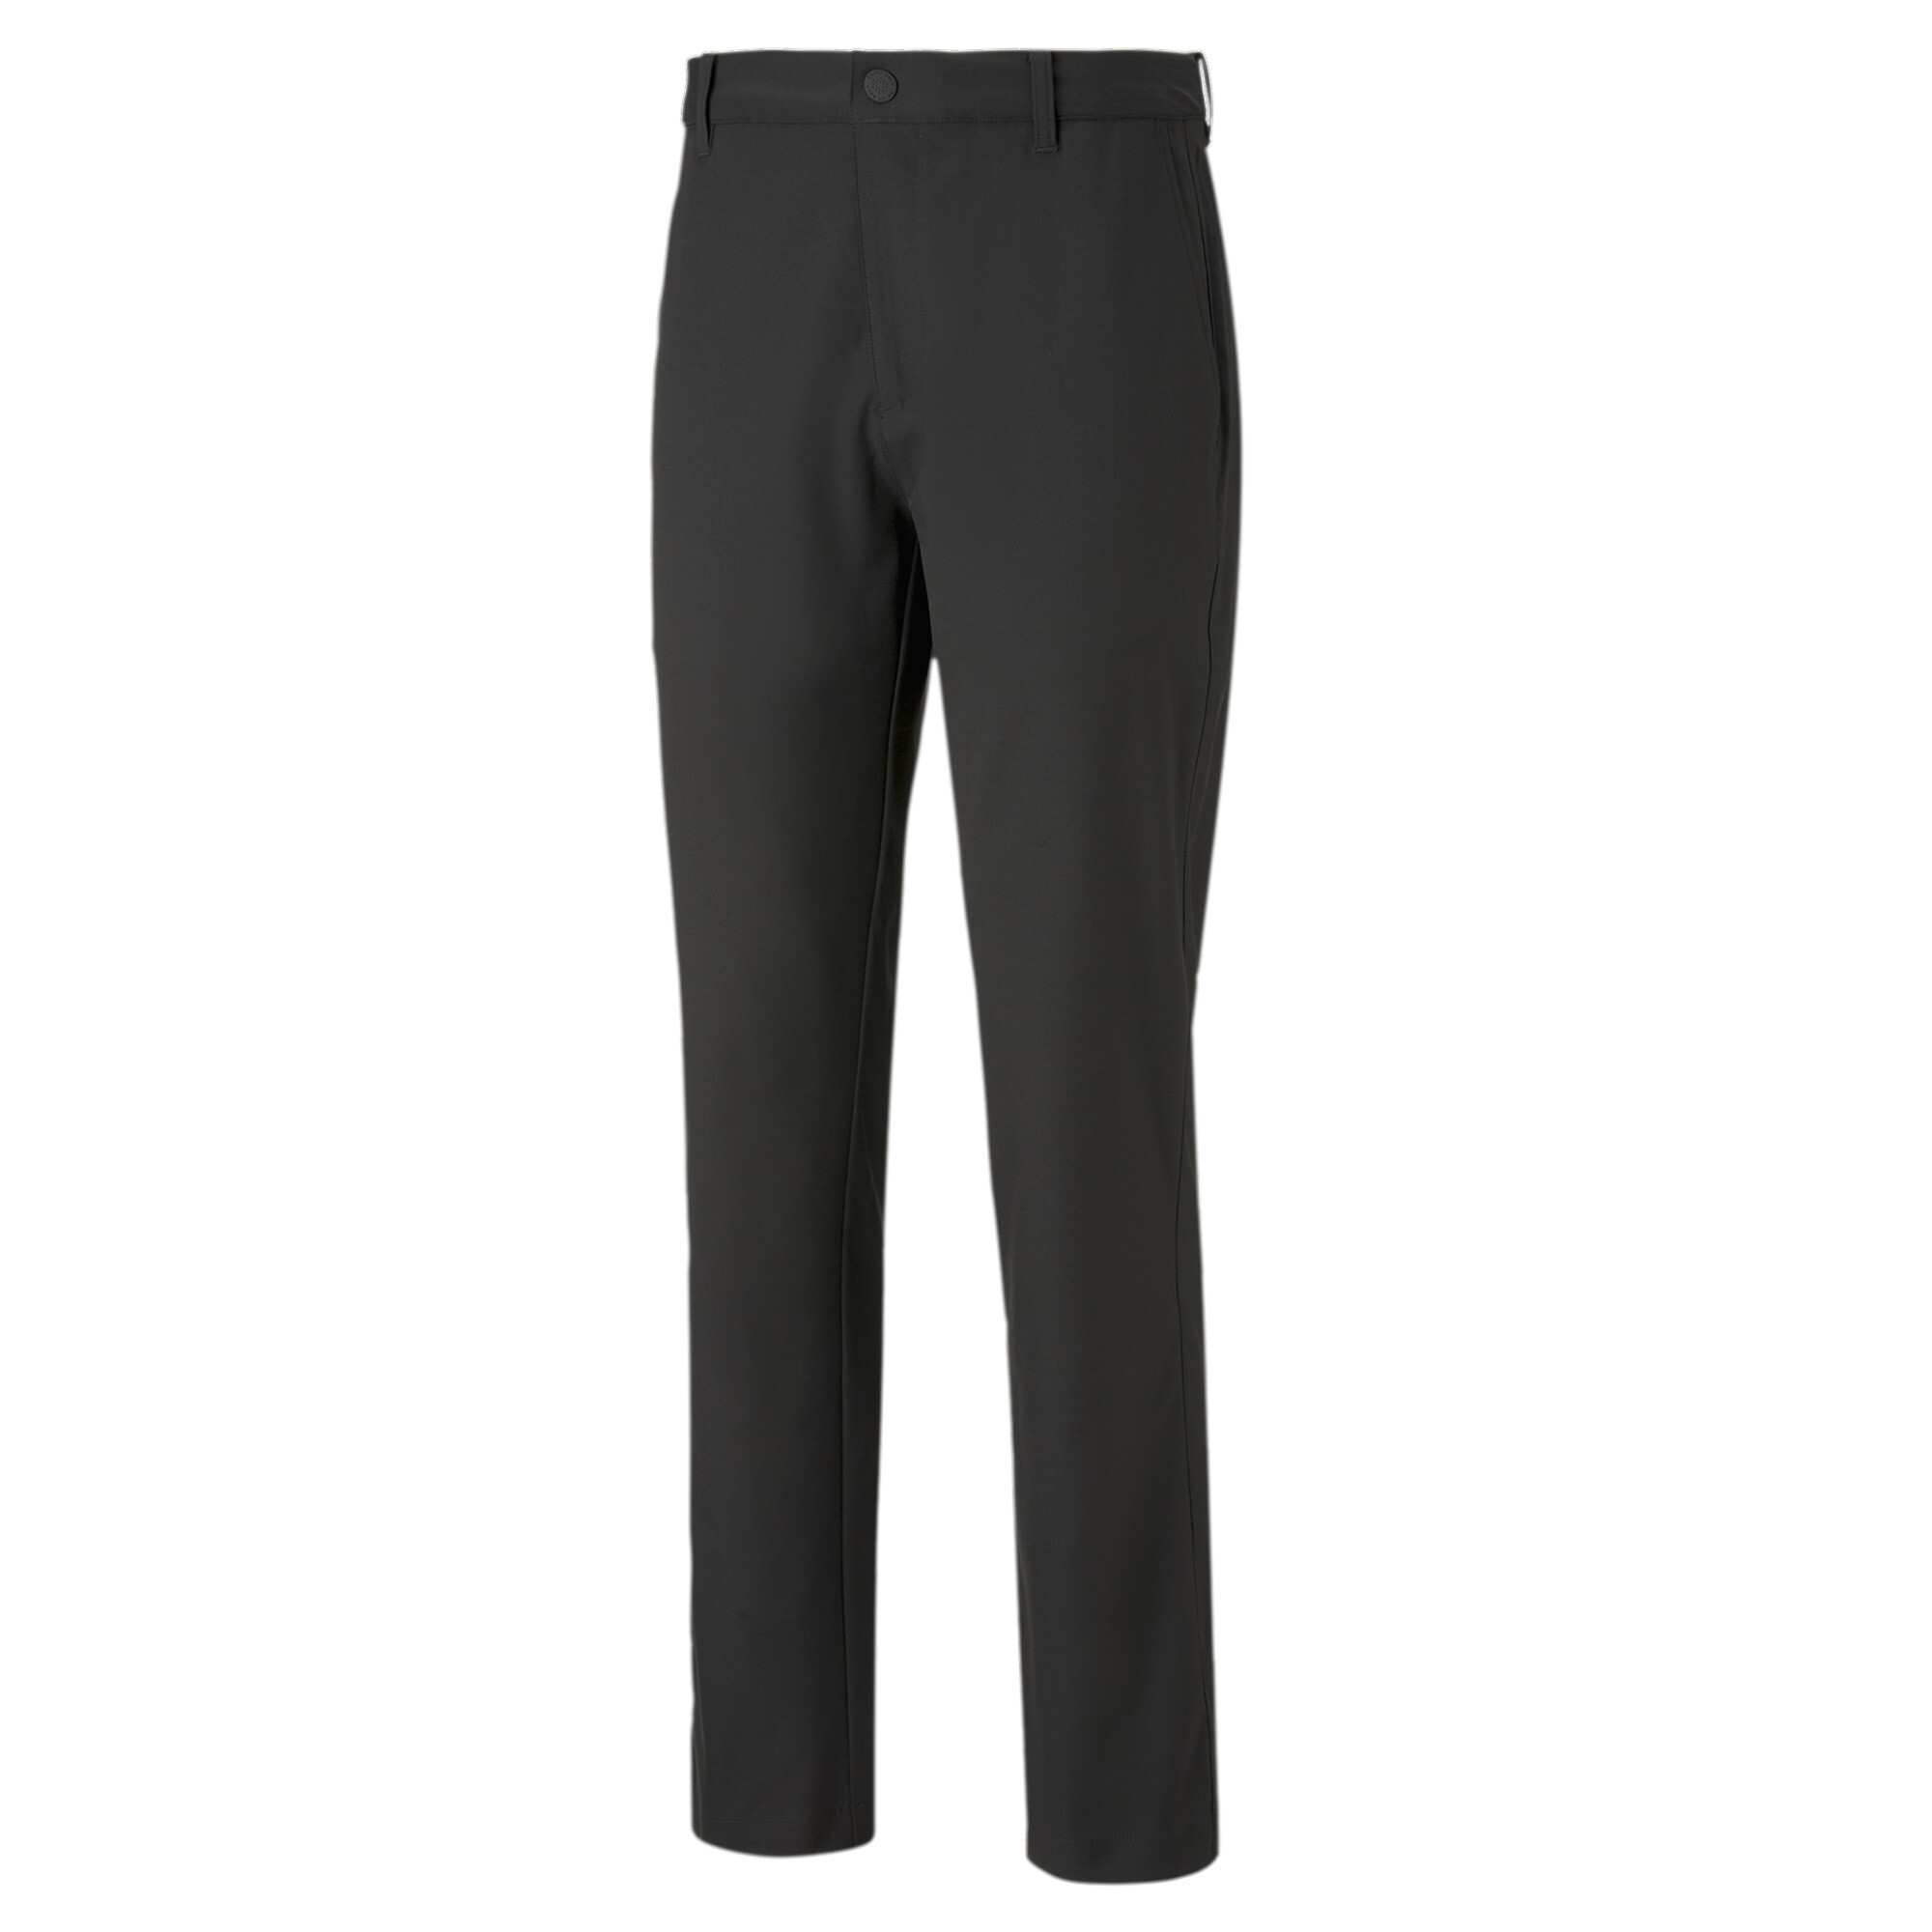 Men's Puma Dealer Golf Pants, Black, Size 40/32, Clothing